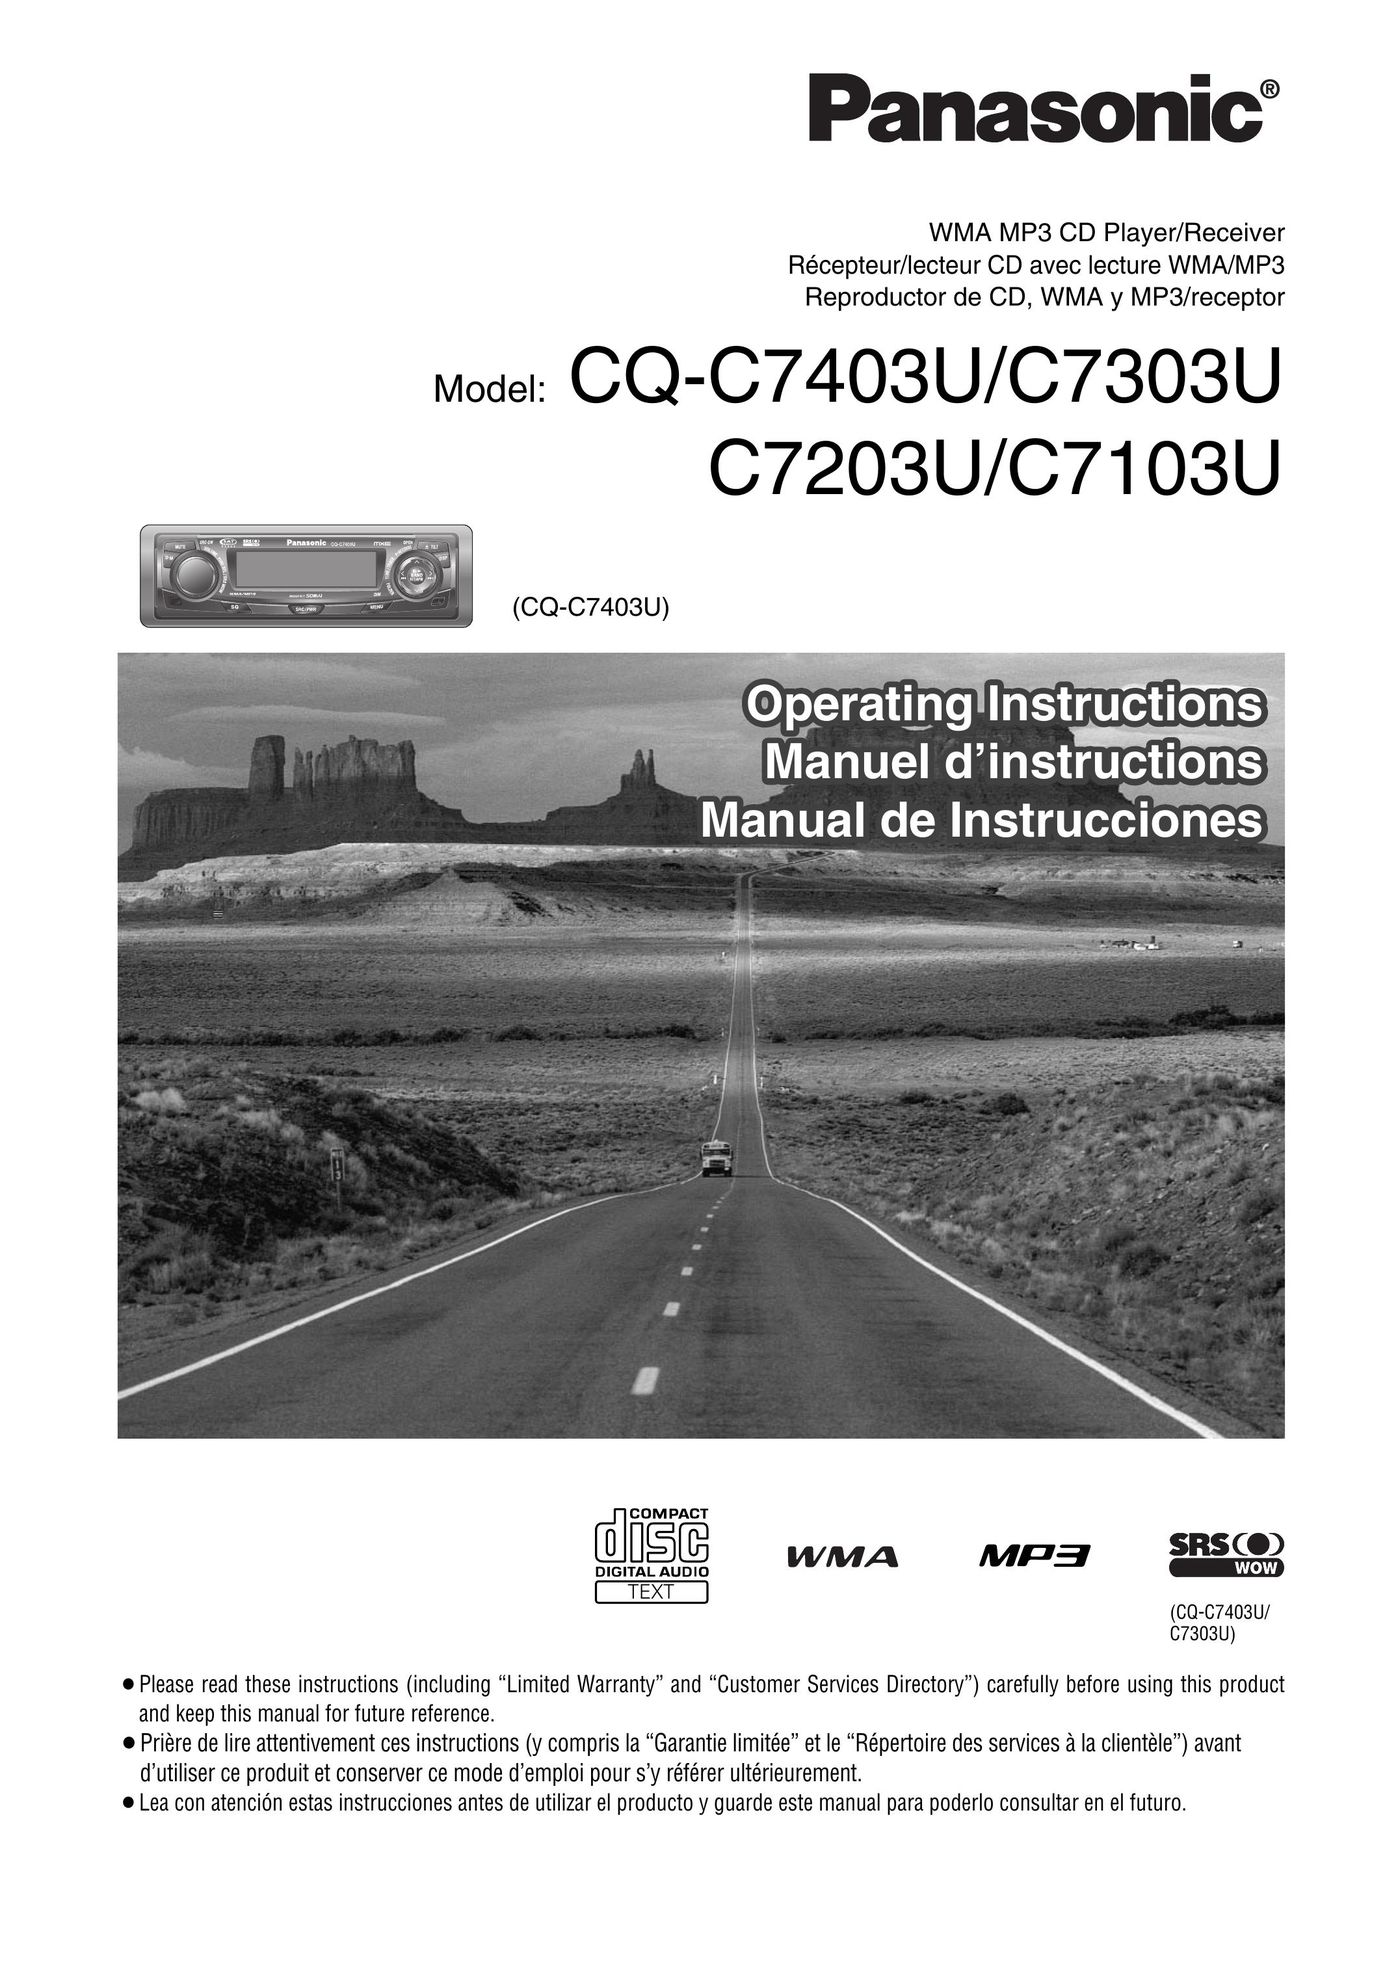 Panasonic C7203U Car Stereo System User Manual